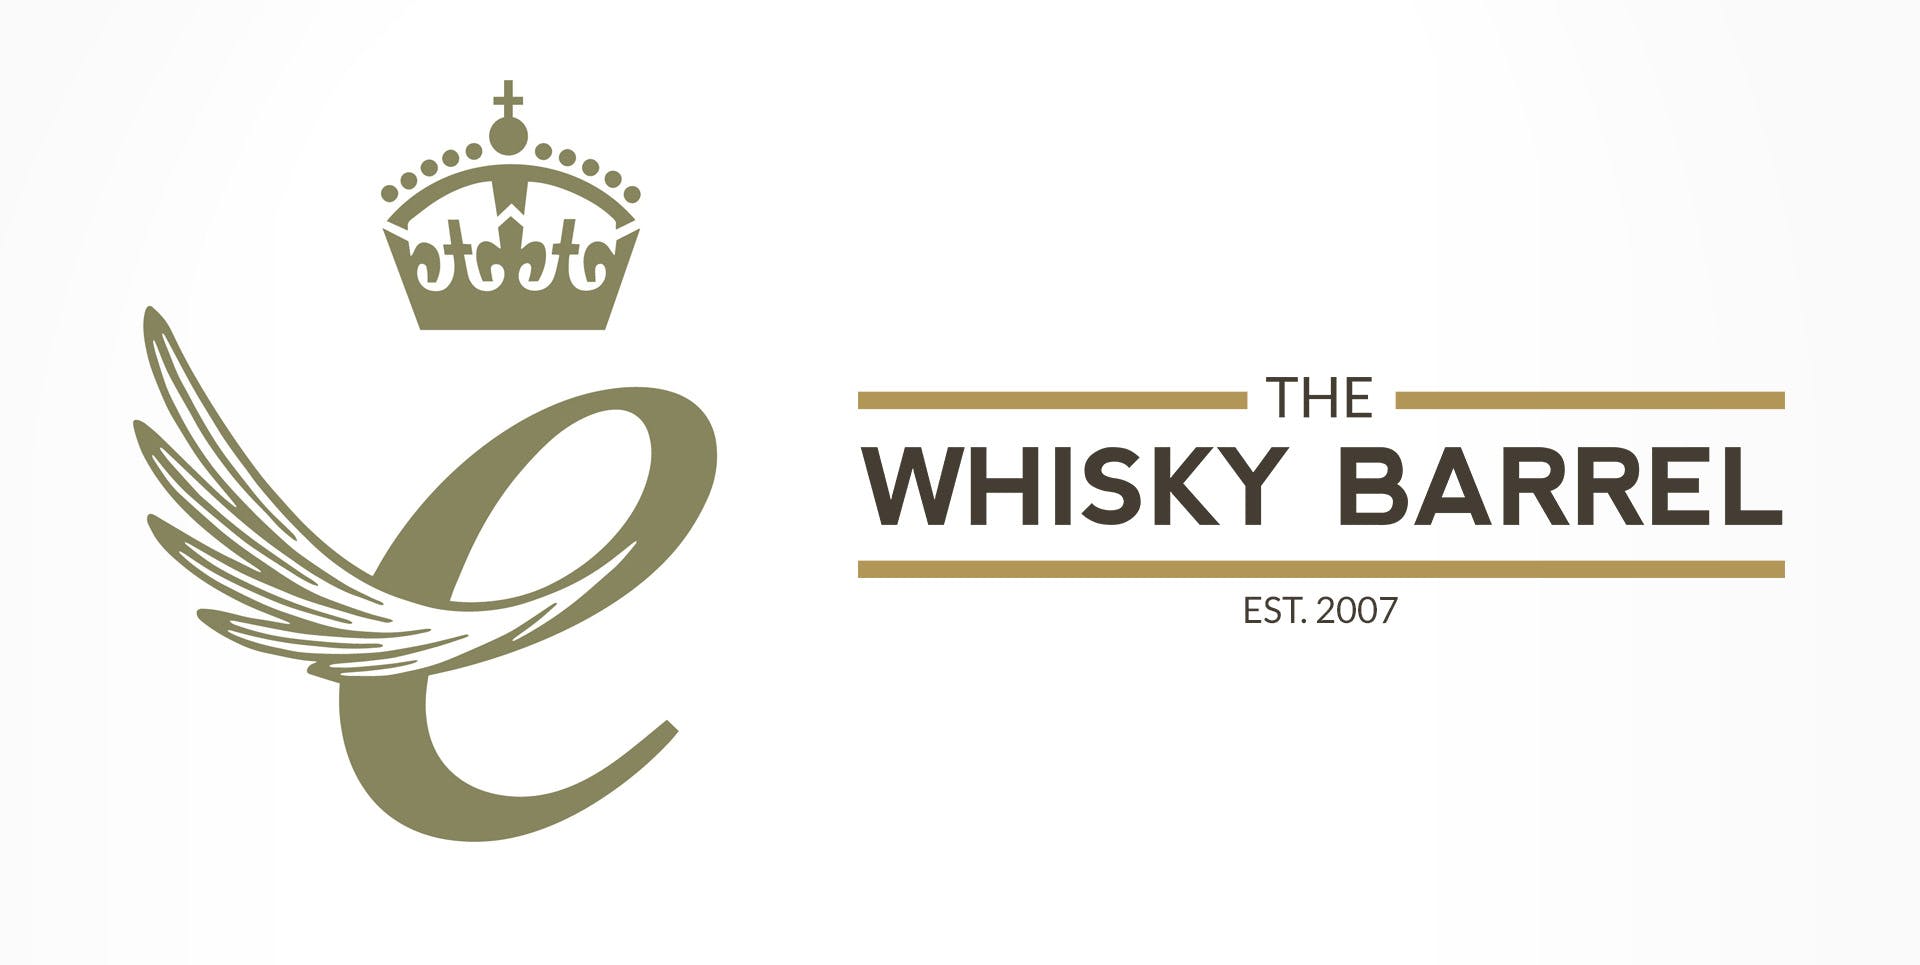 Thew Whisky Barrel Wins Queens Award